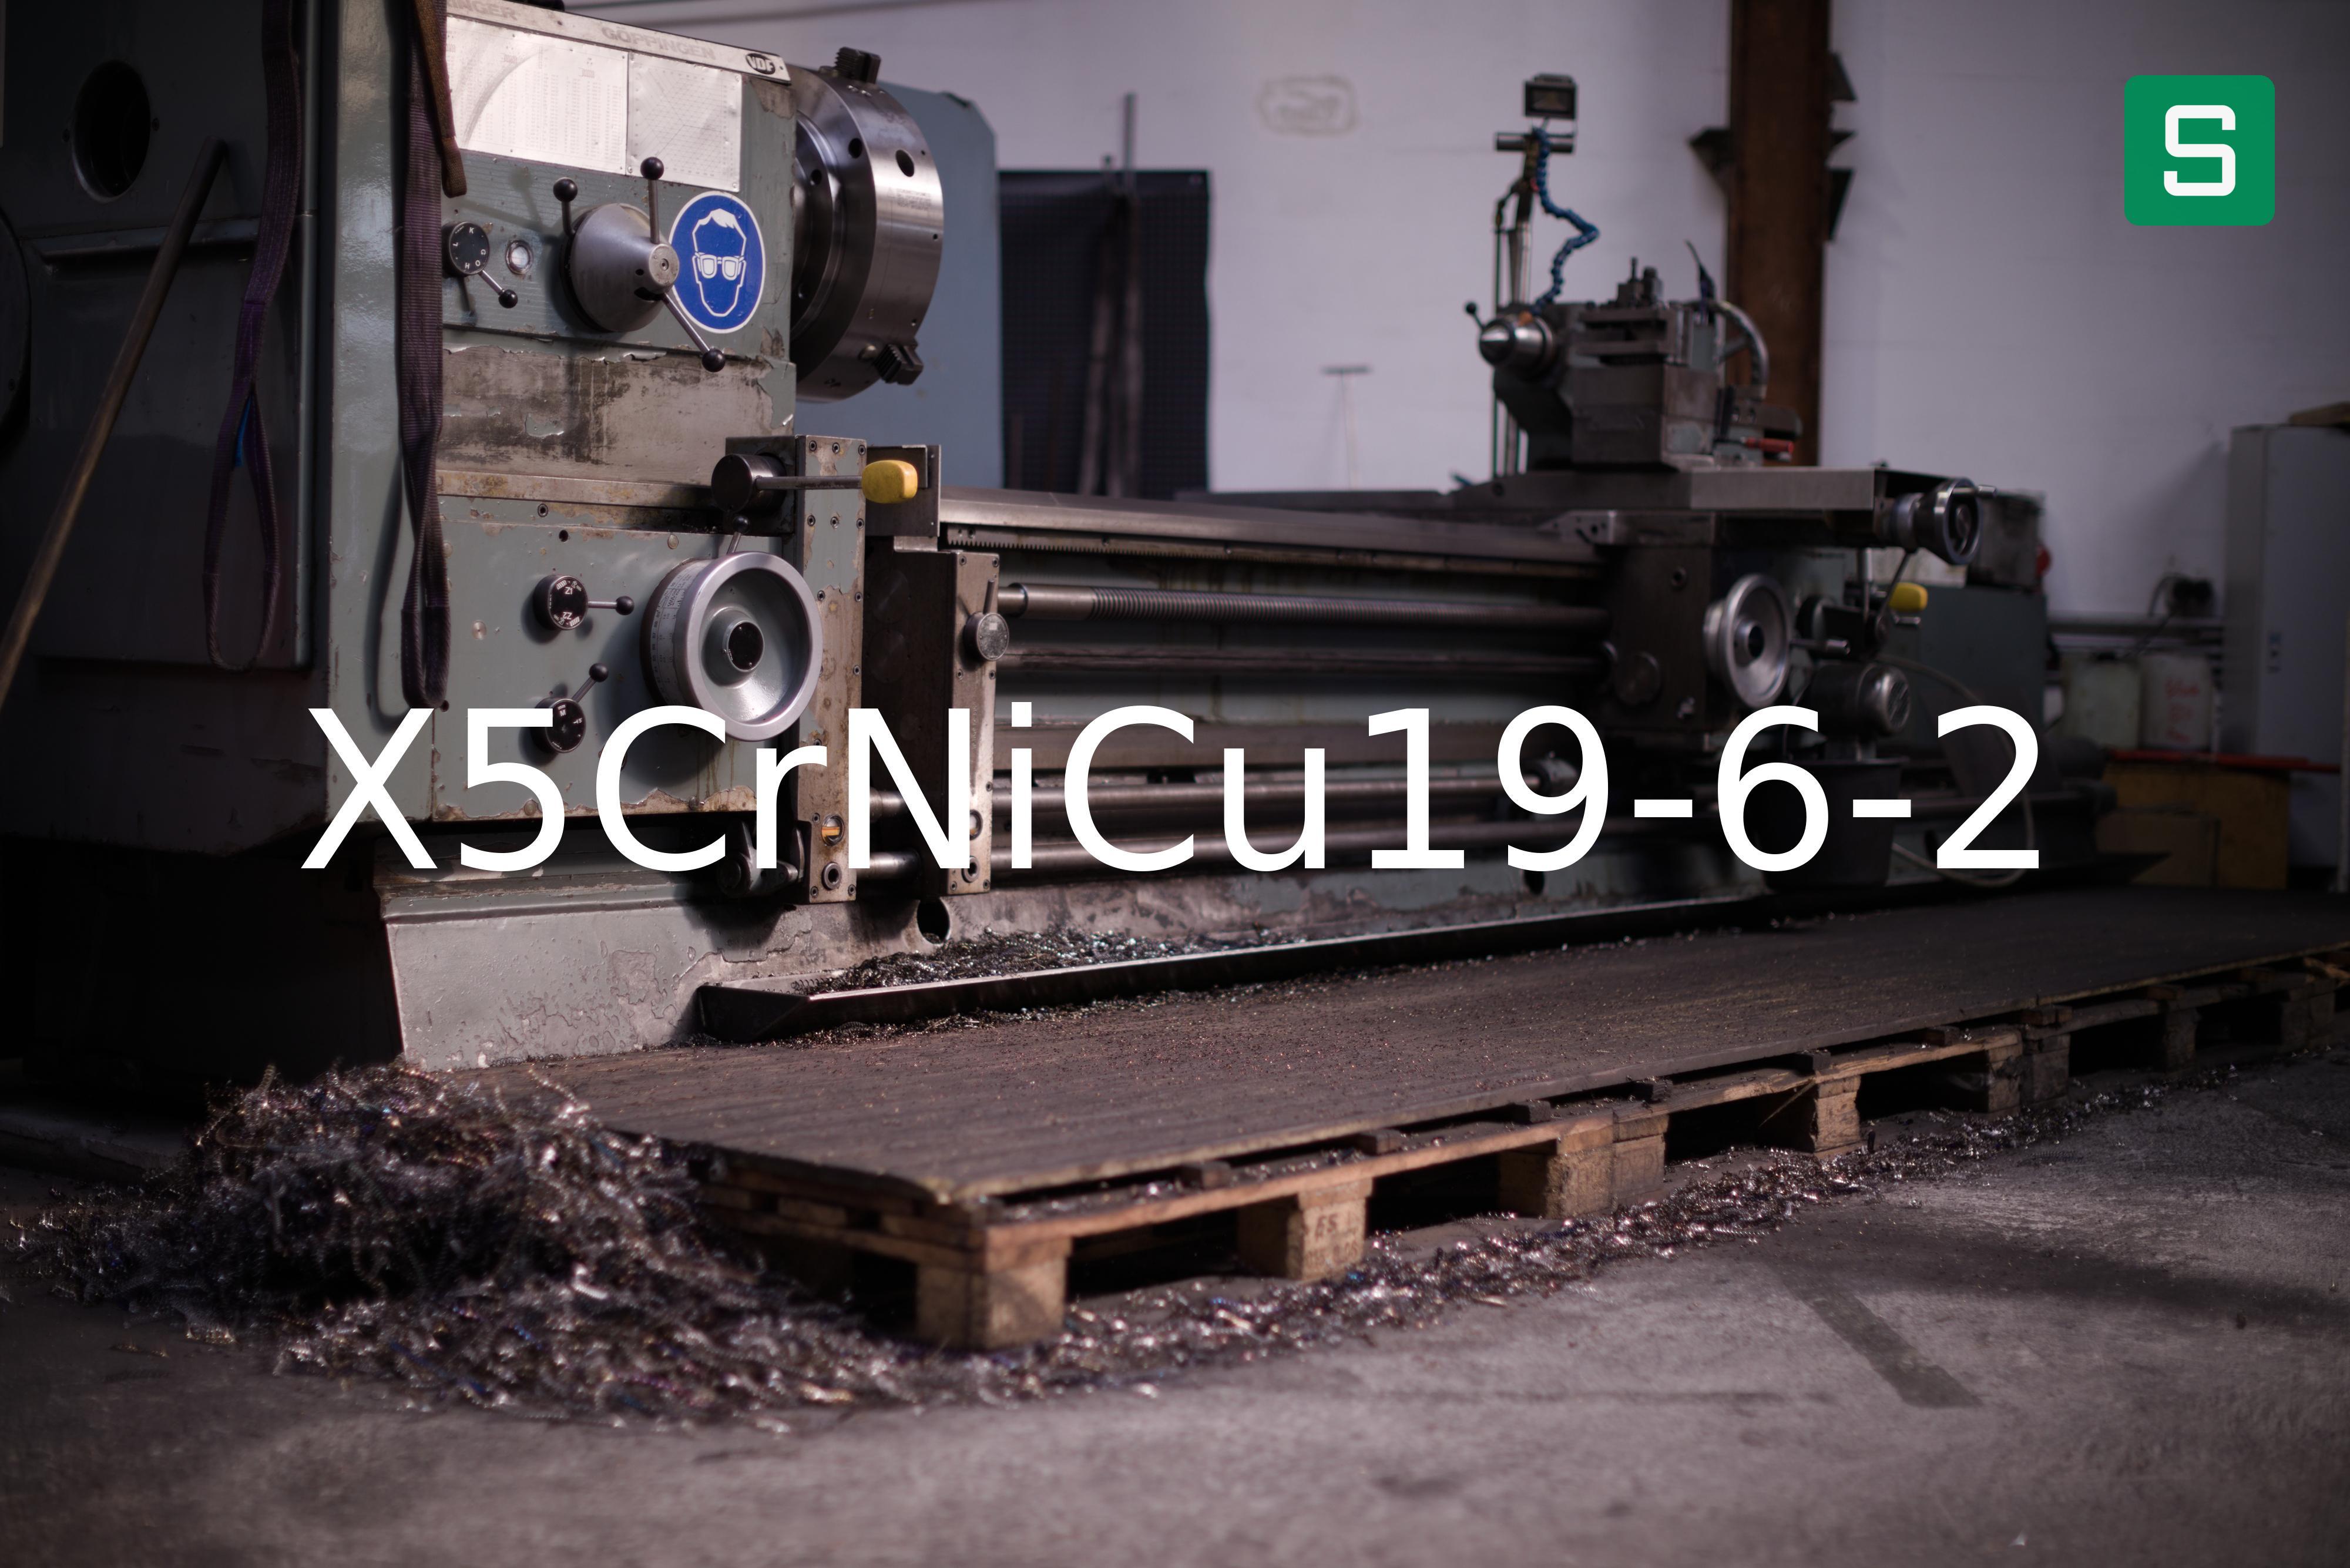 Stahlwerkstoff: X5CrNiCu19-6-2